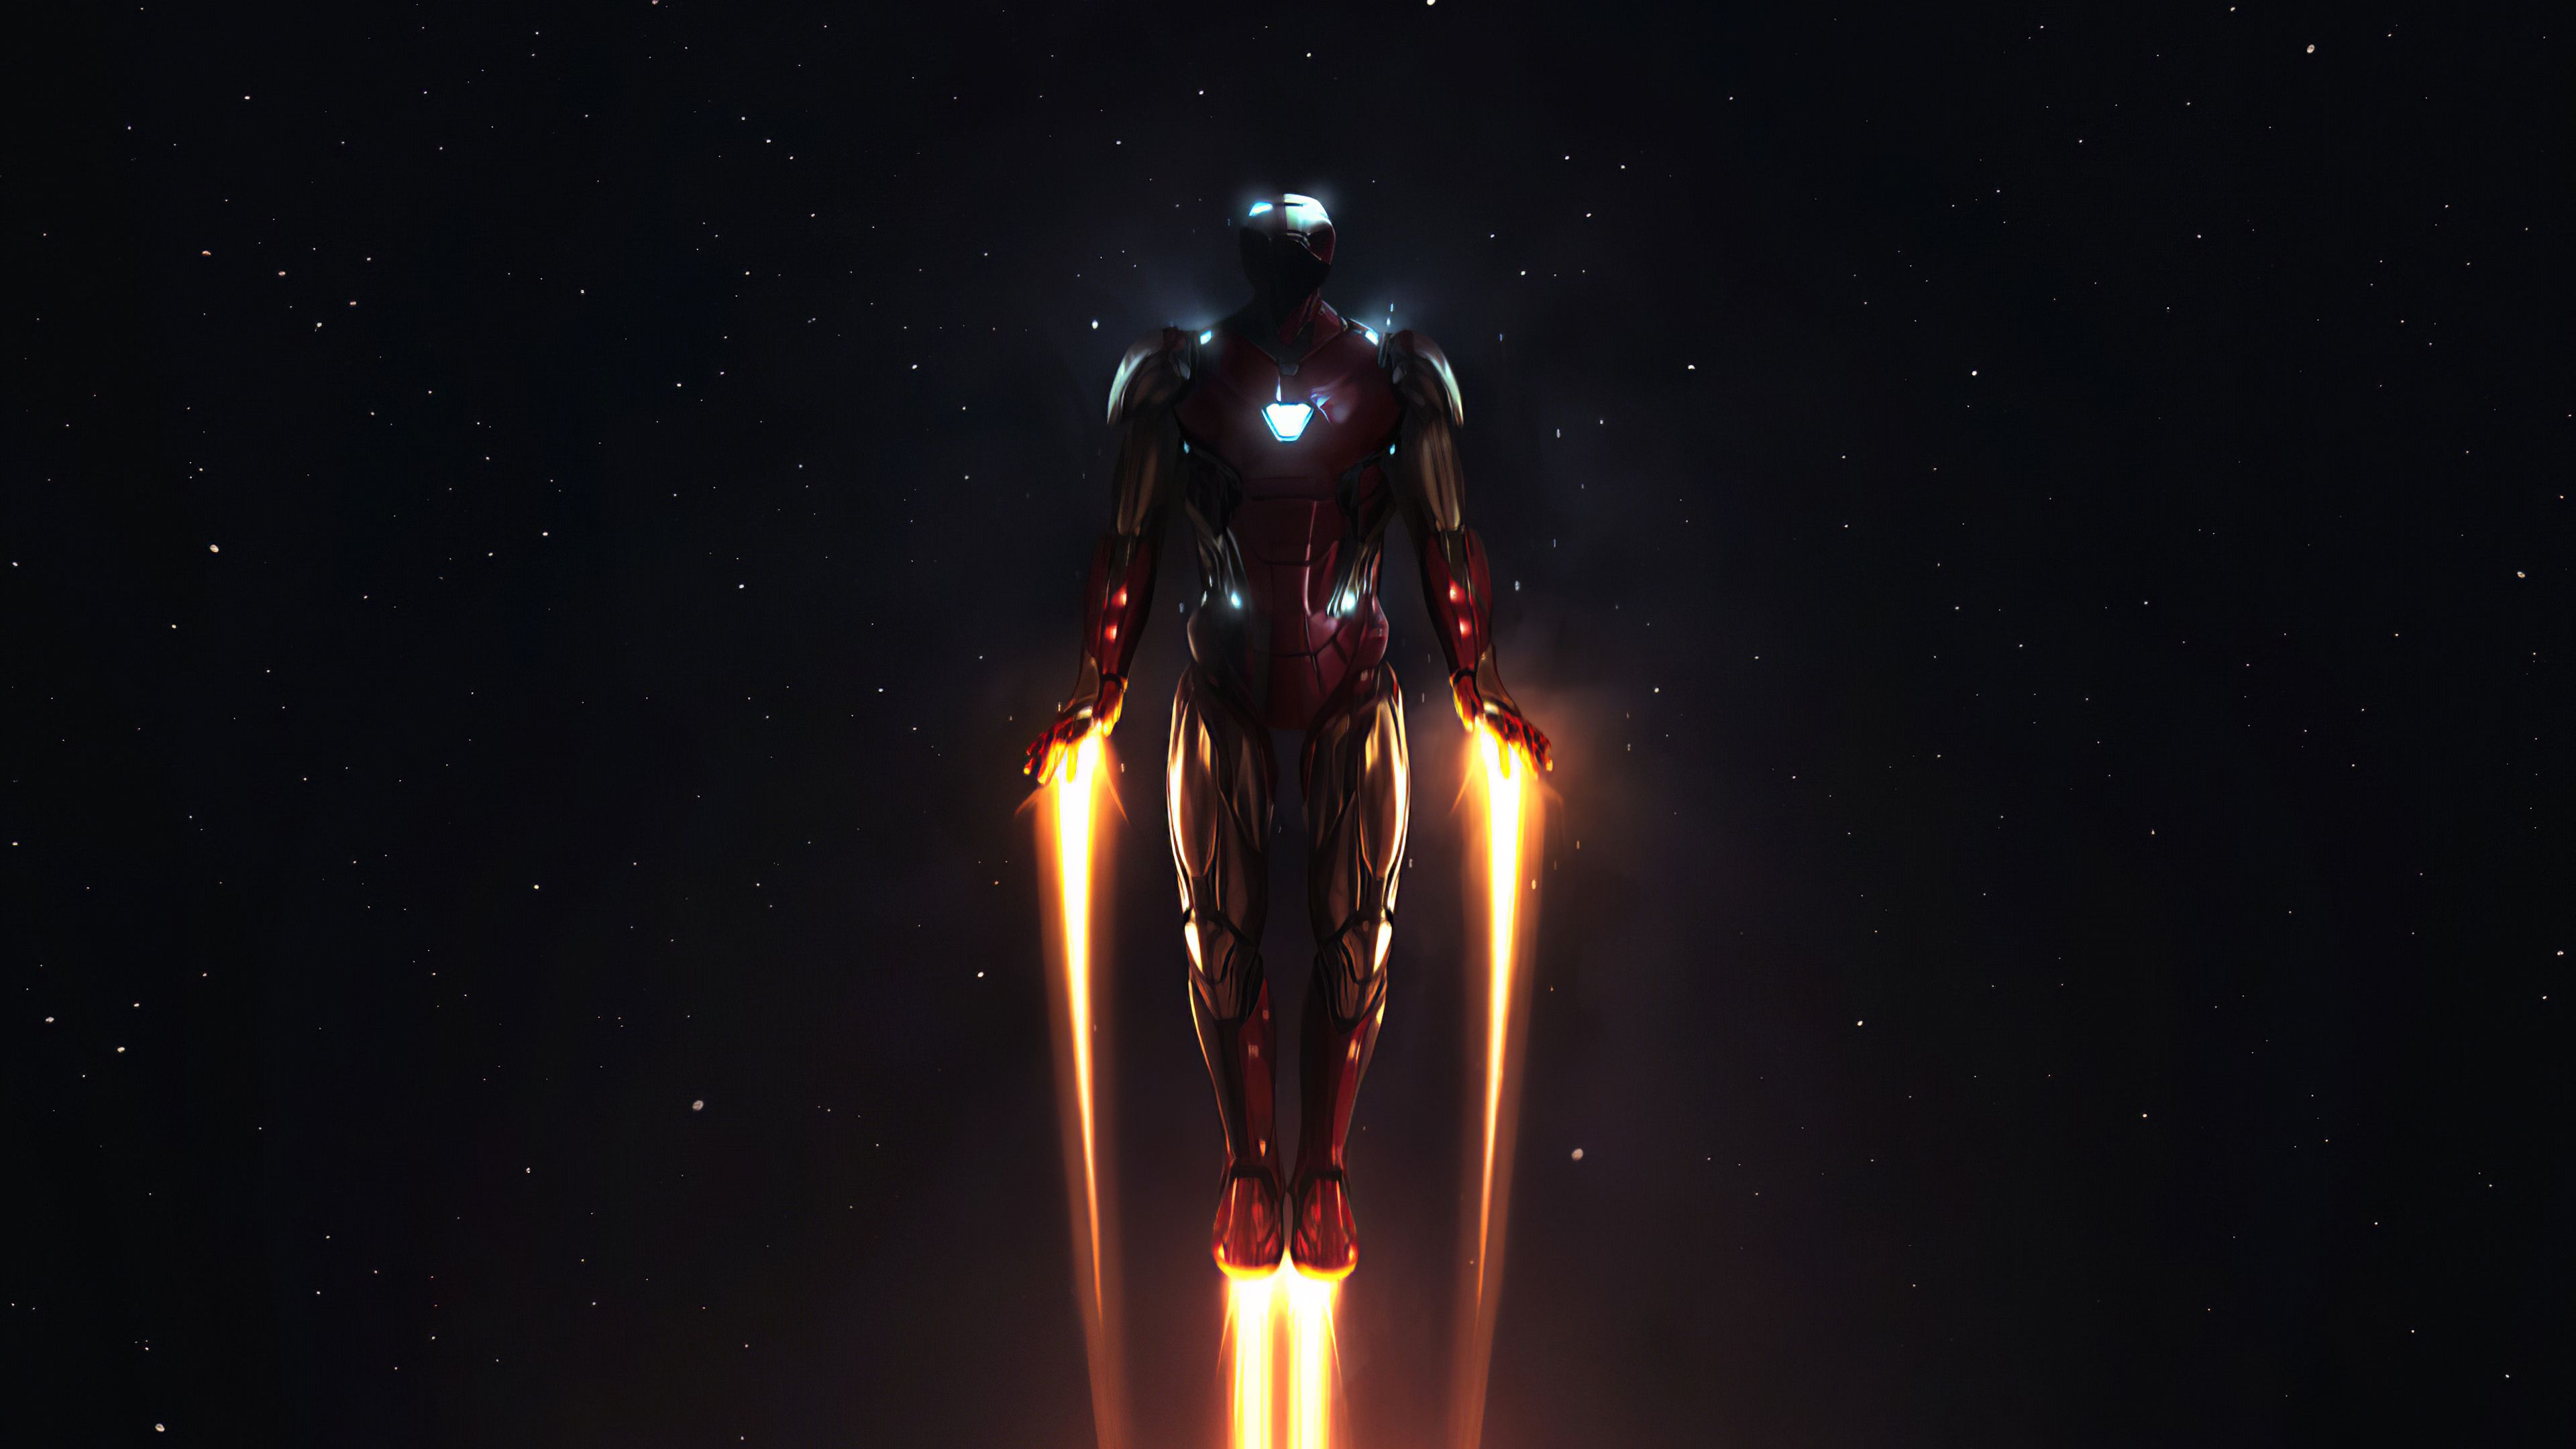 iron man silhouette flying